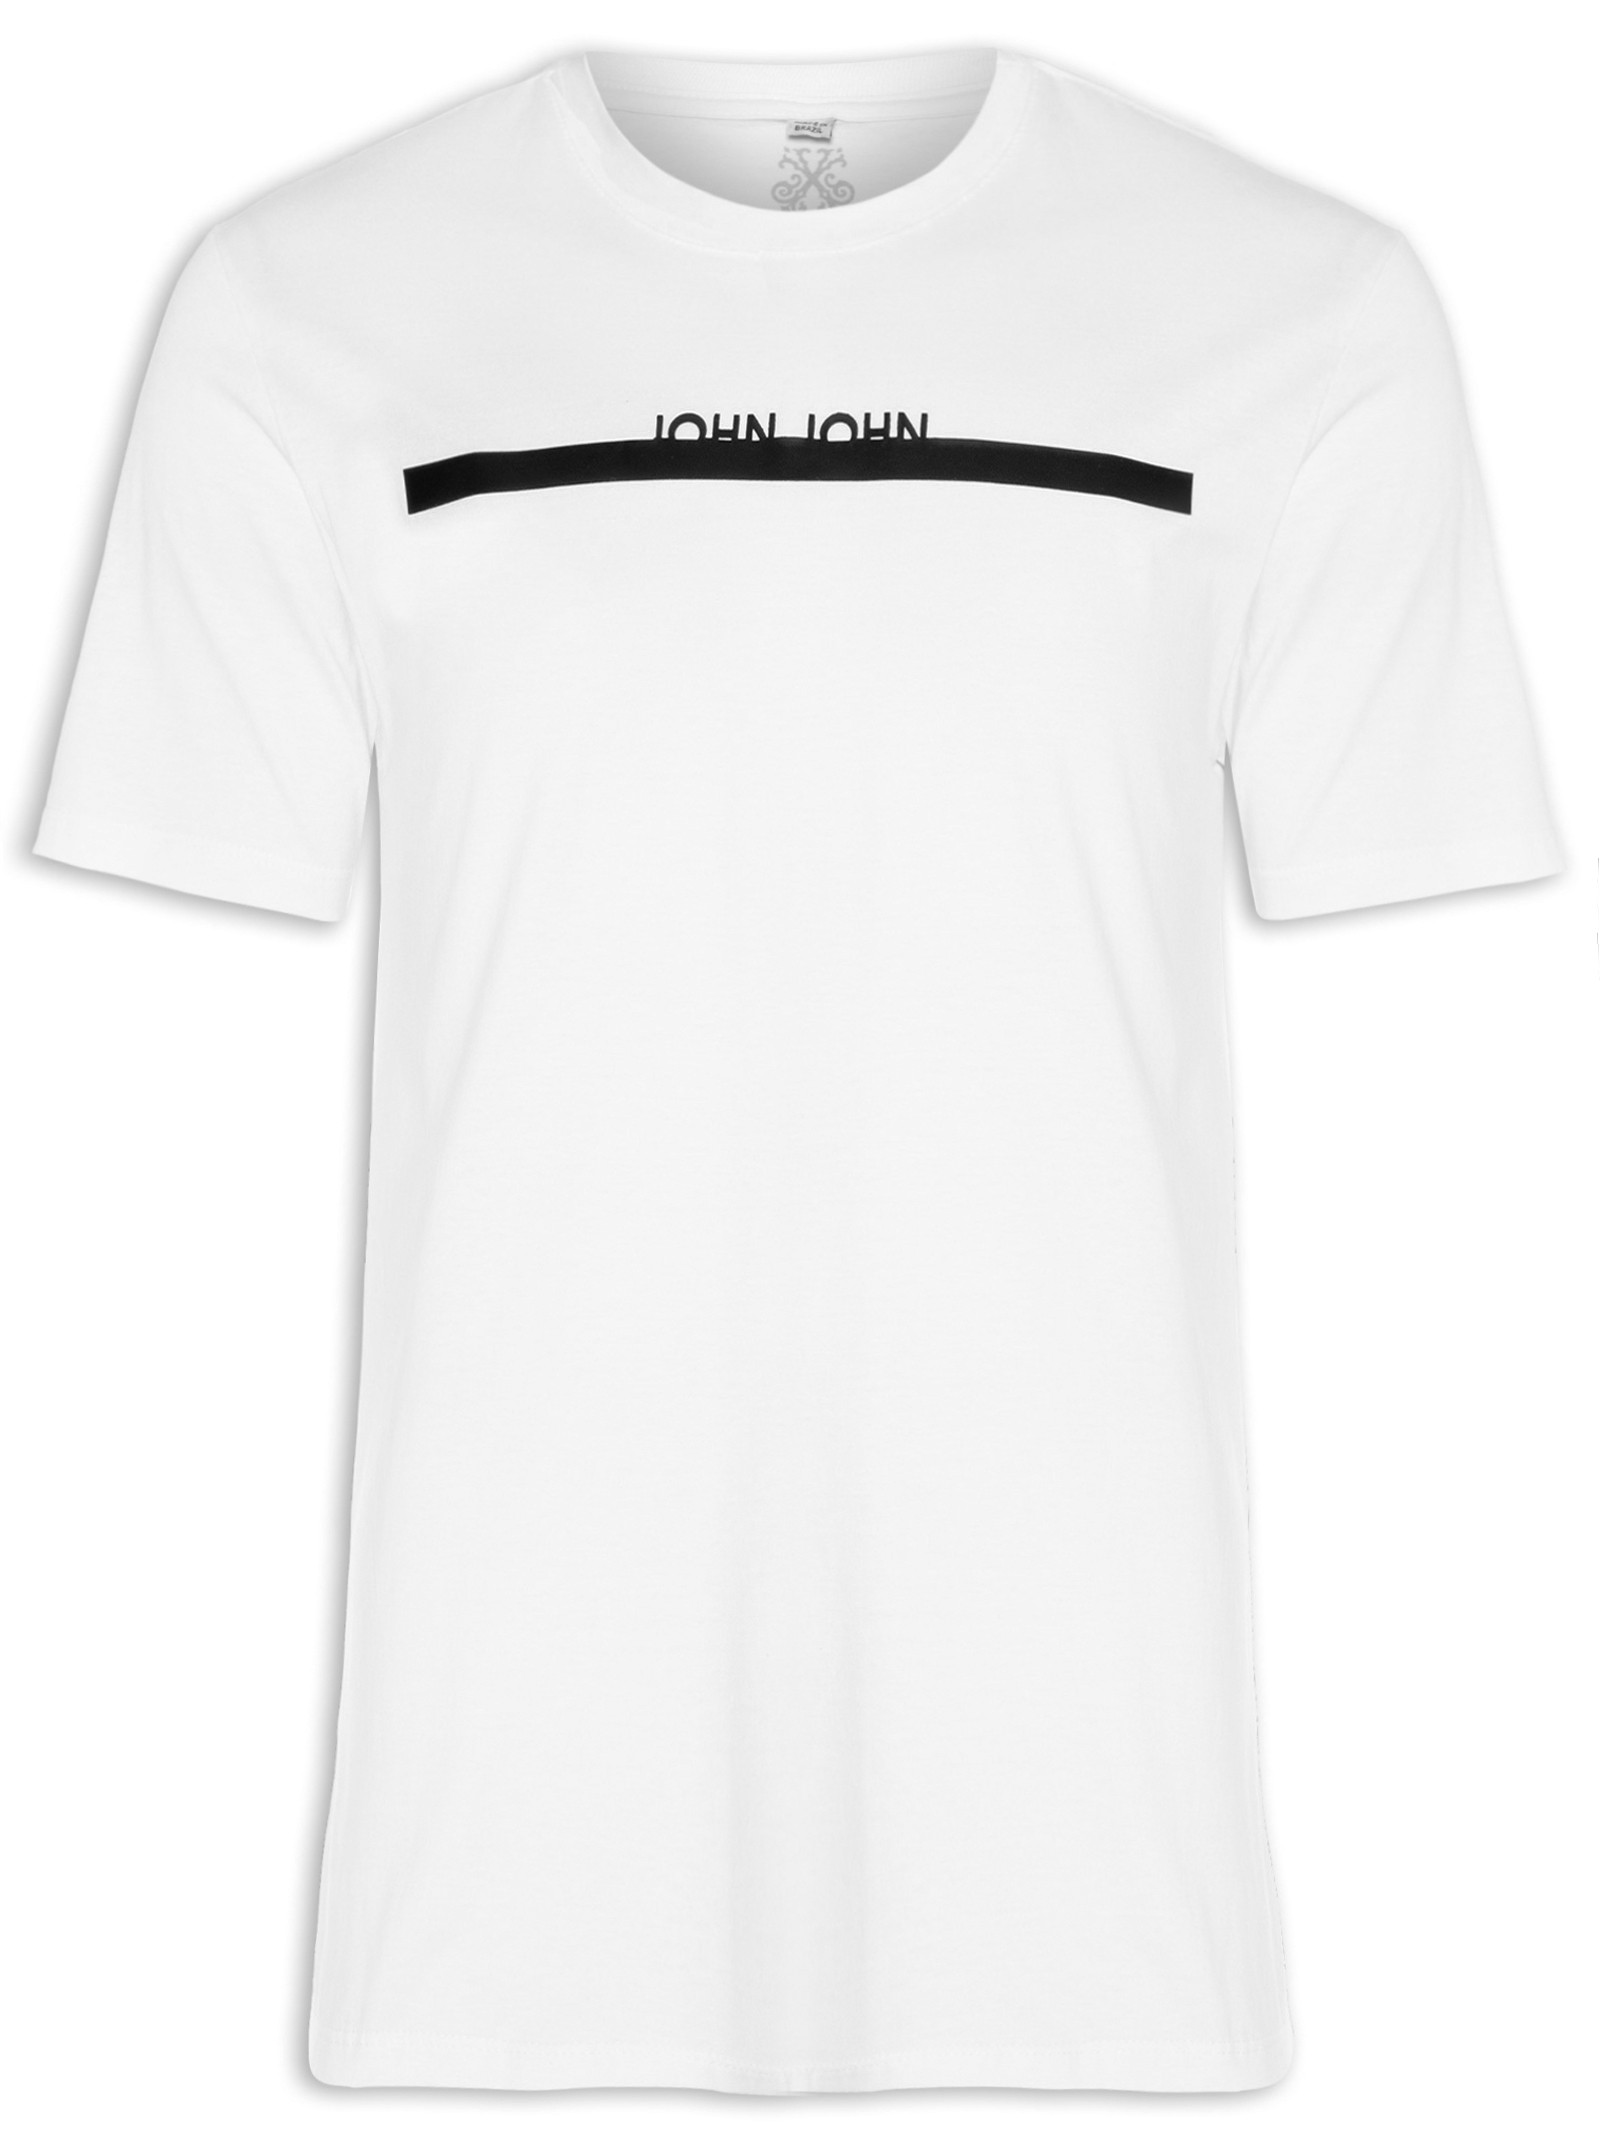 T-shirt Masculina Rg New Botone - John John - Branco - Shop2gether